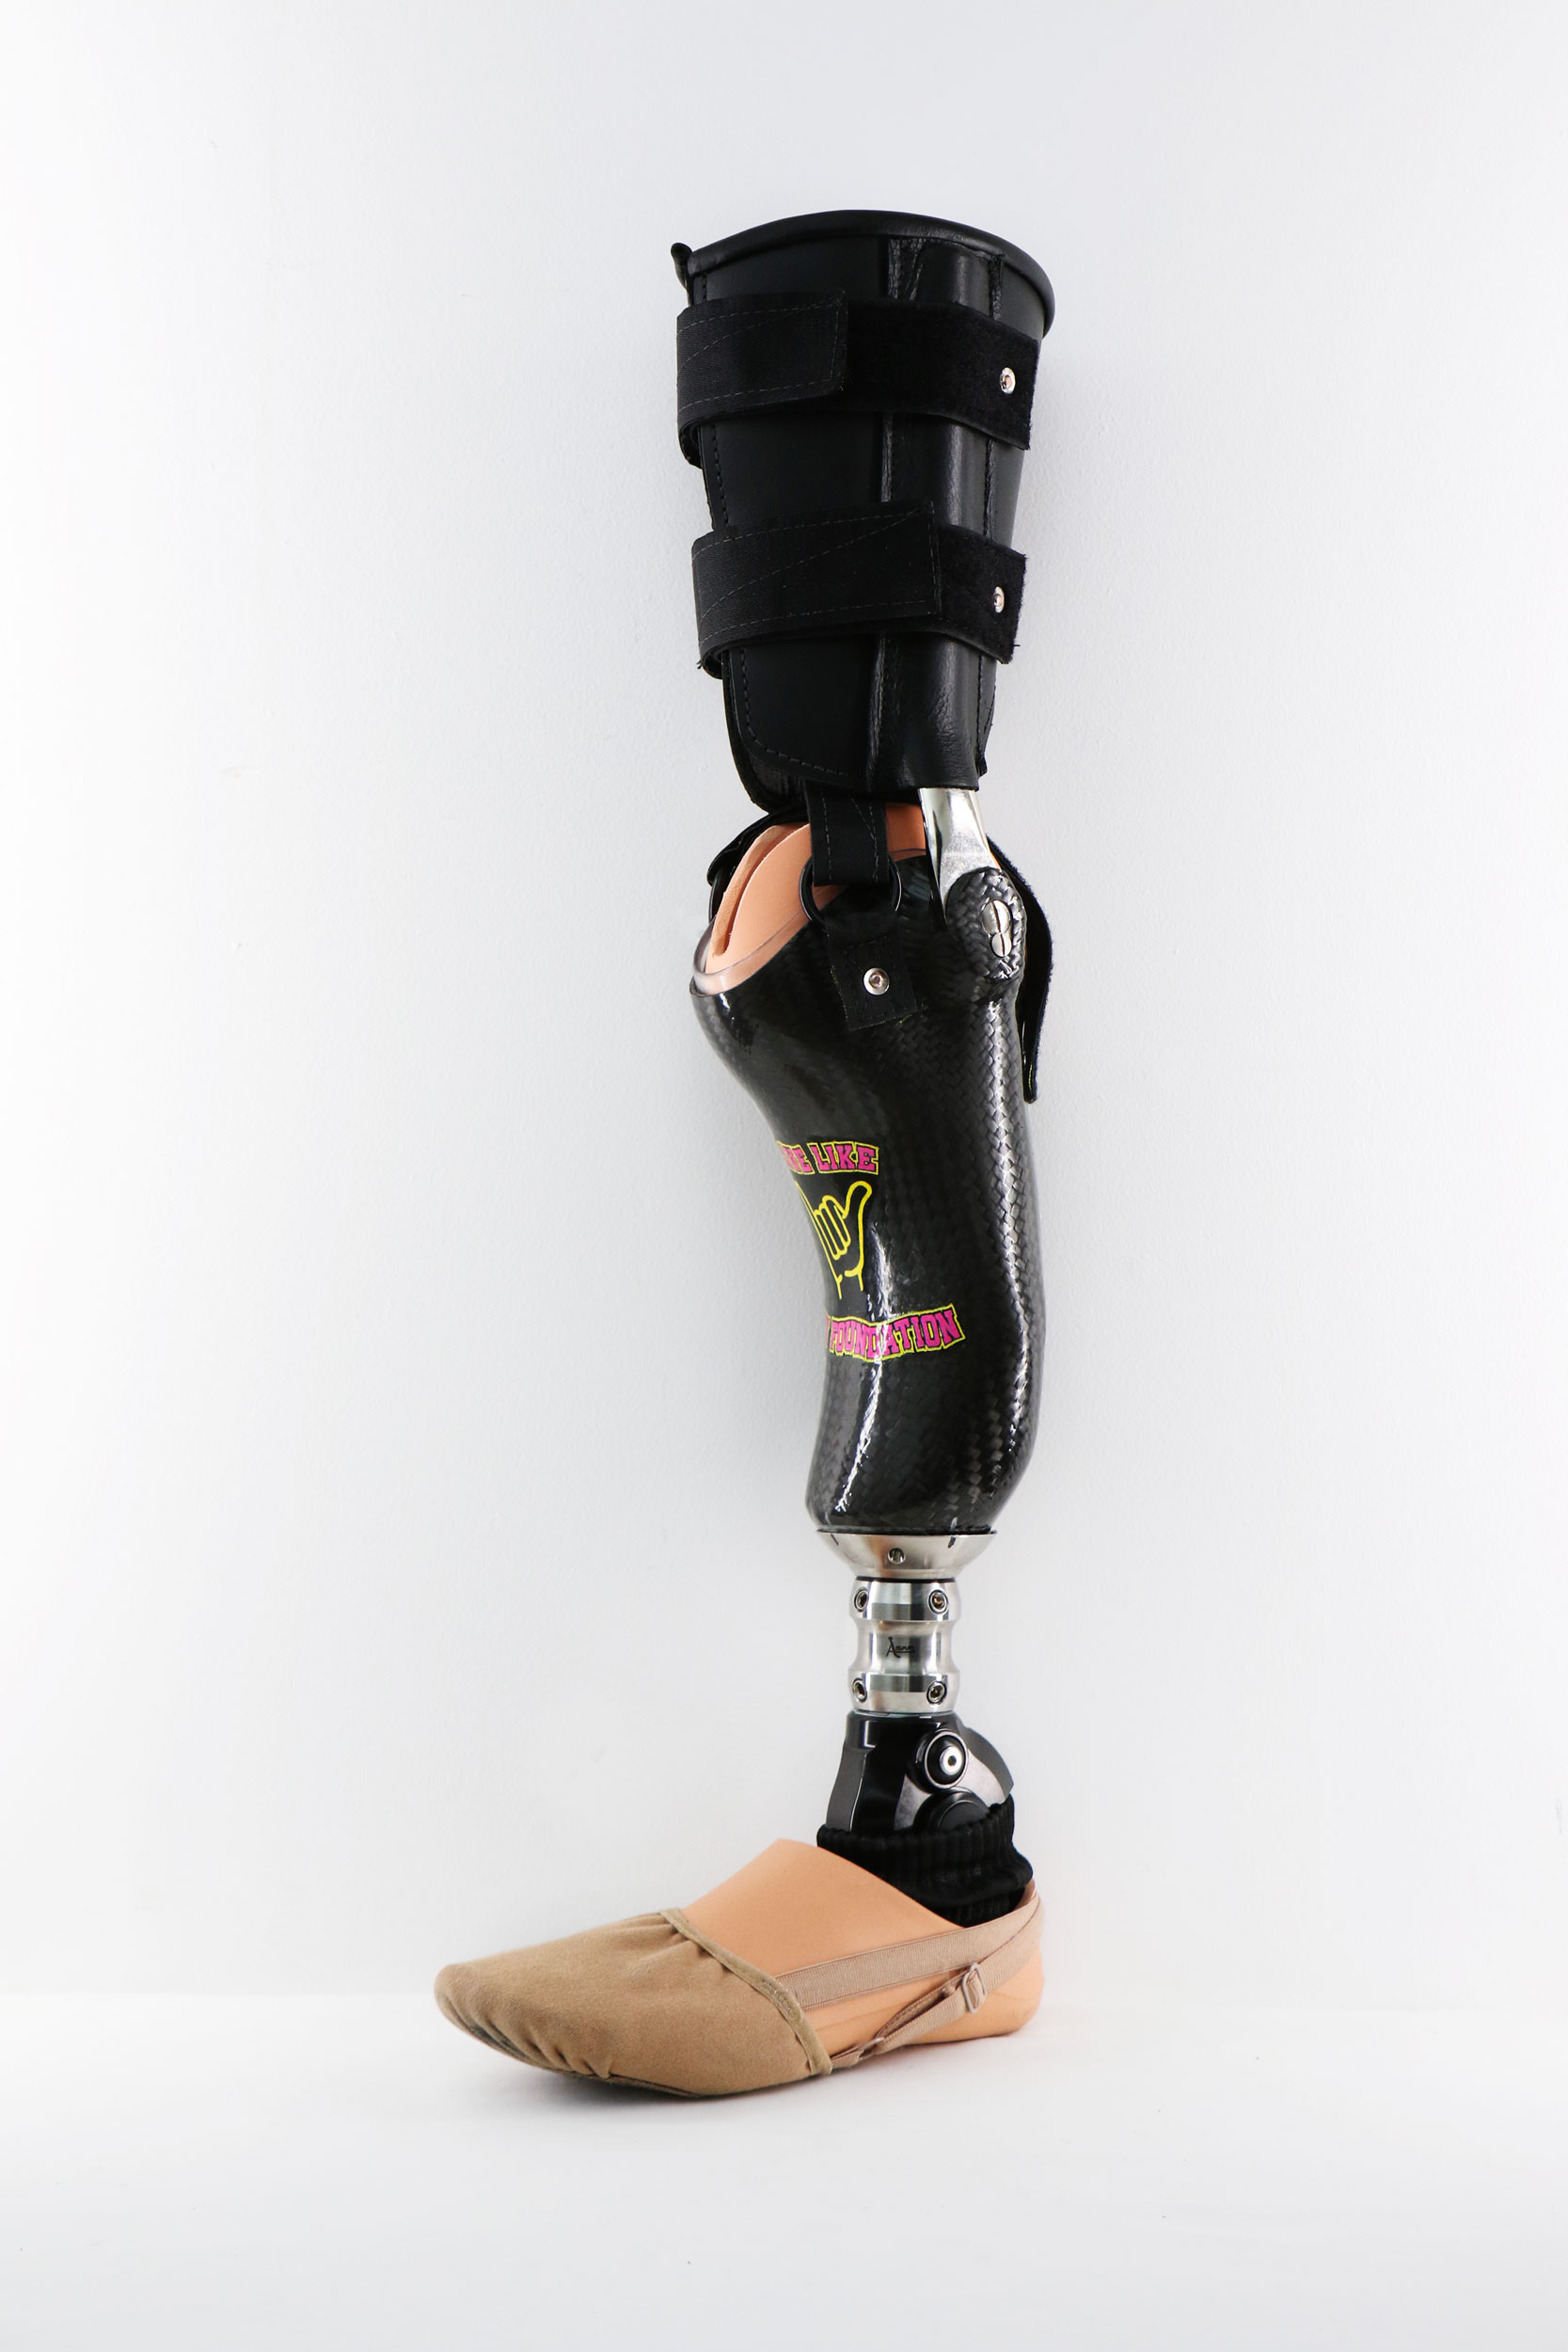 Custom Prosthetic Leg for amputee